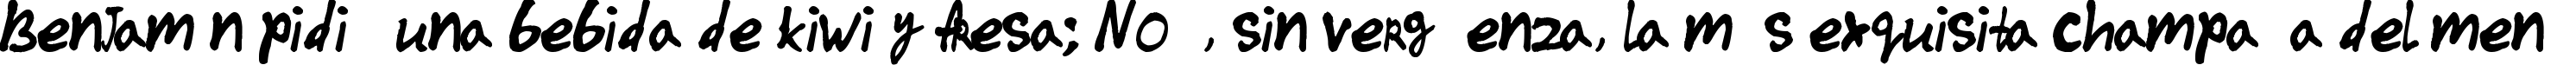 Пример написания шрифтом Darth Emil текста на испанском